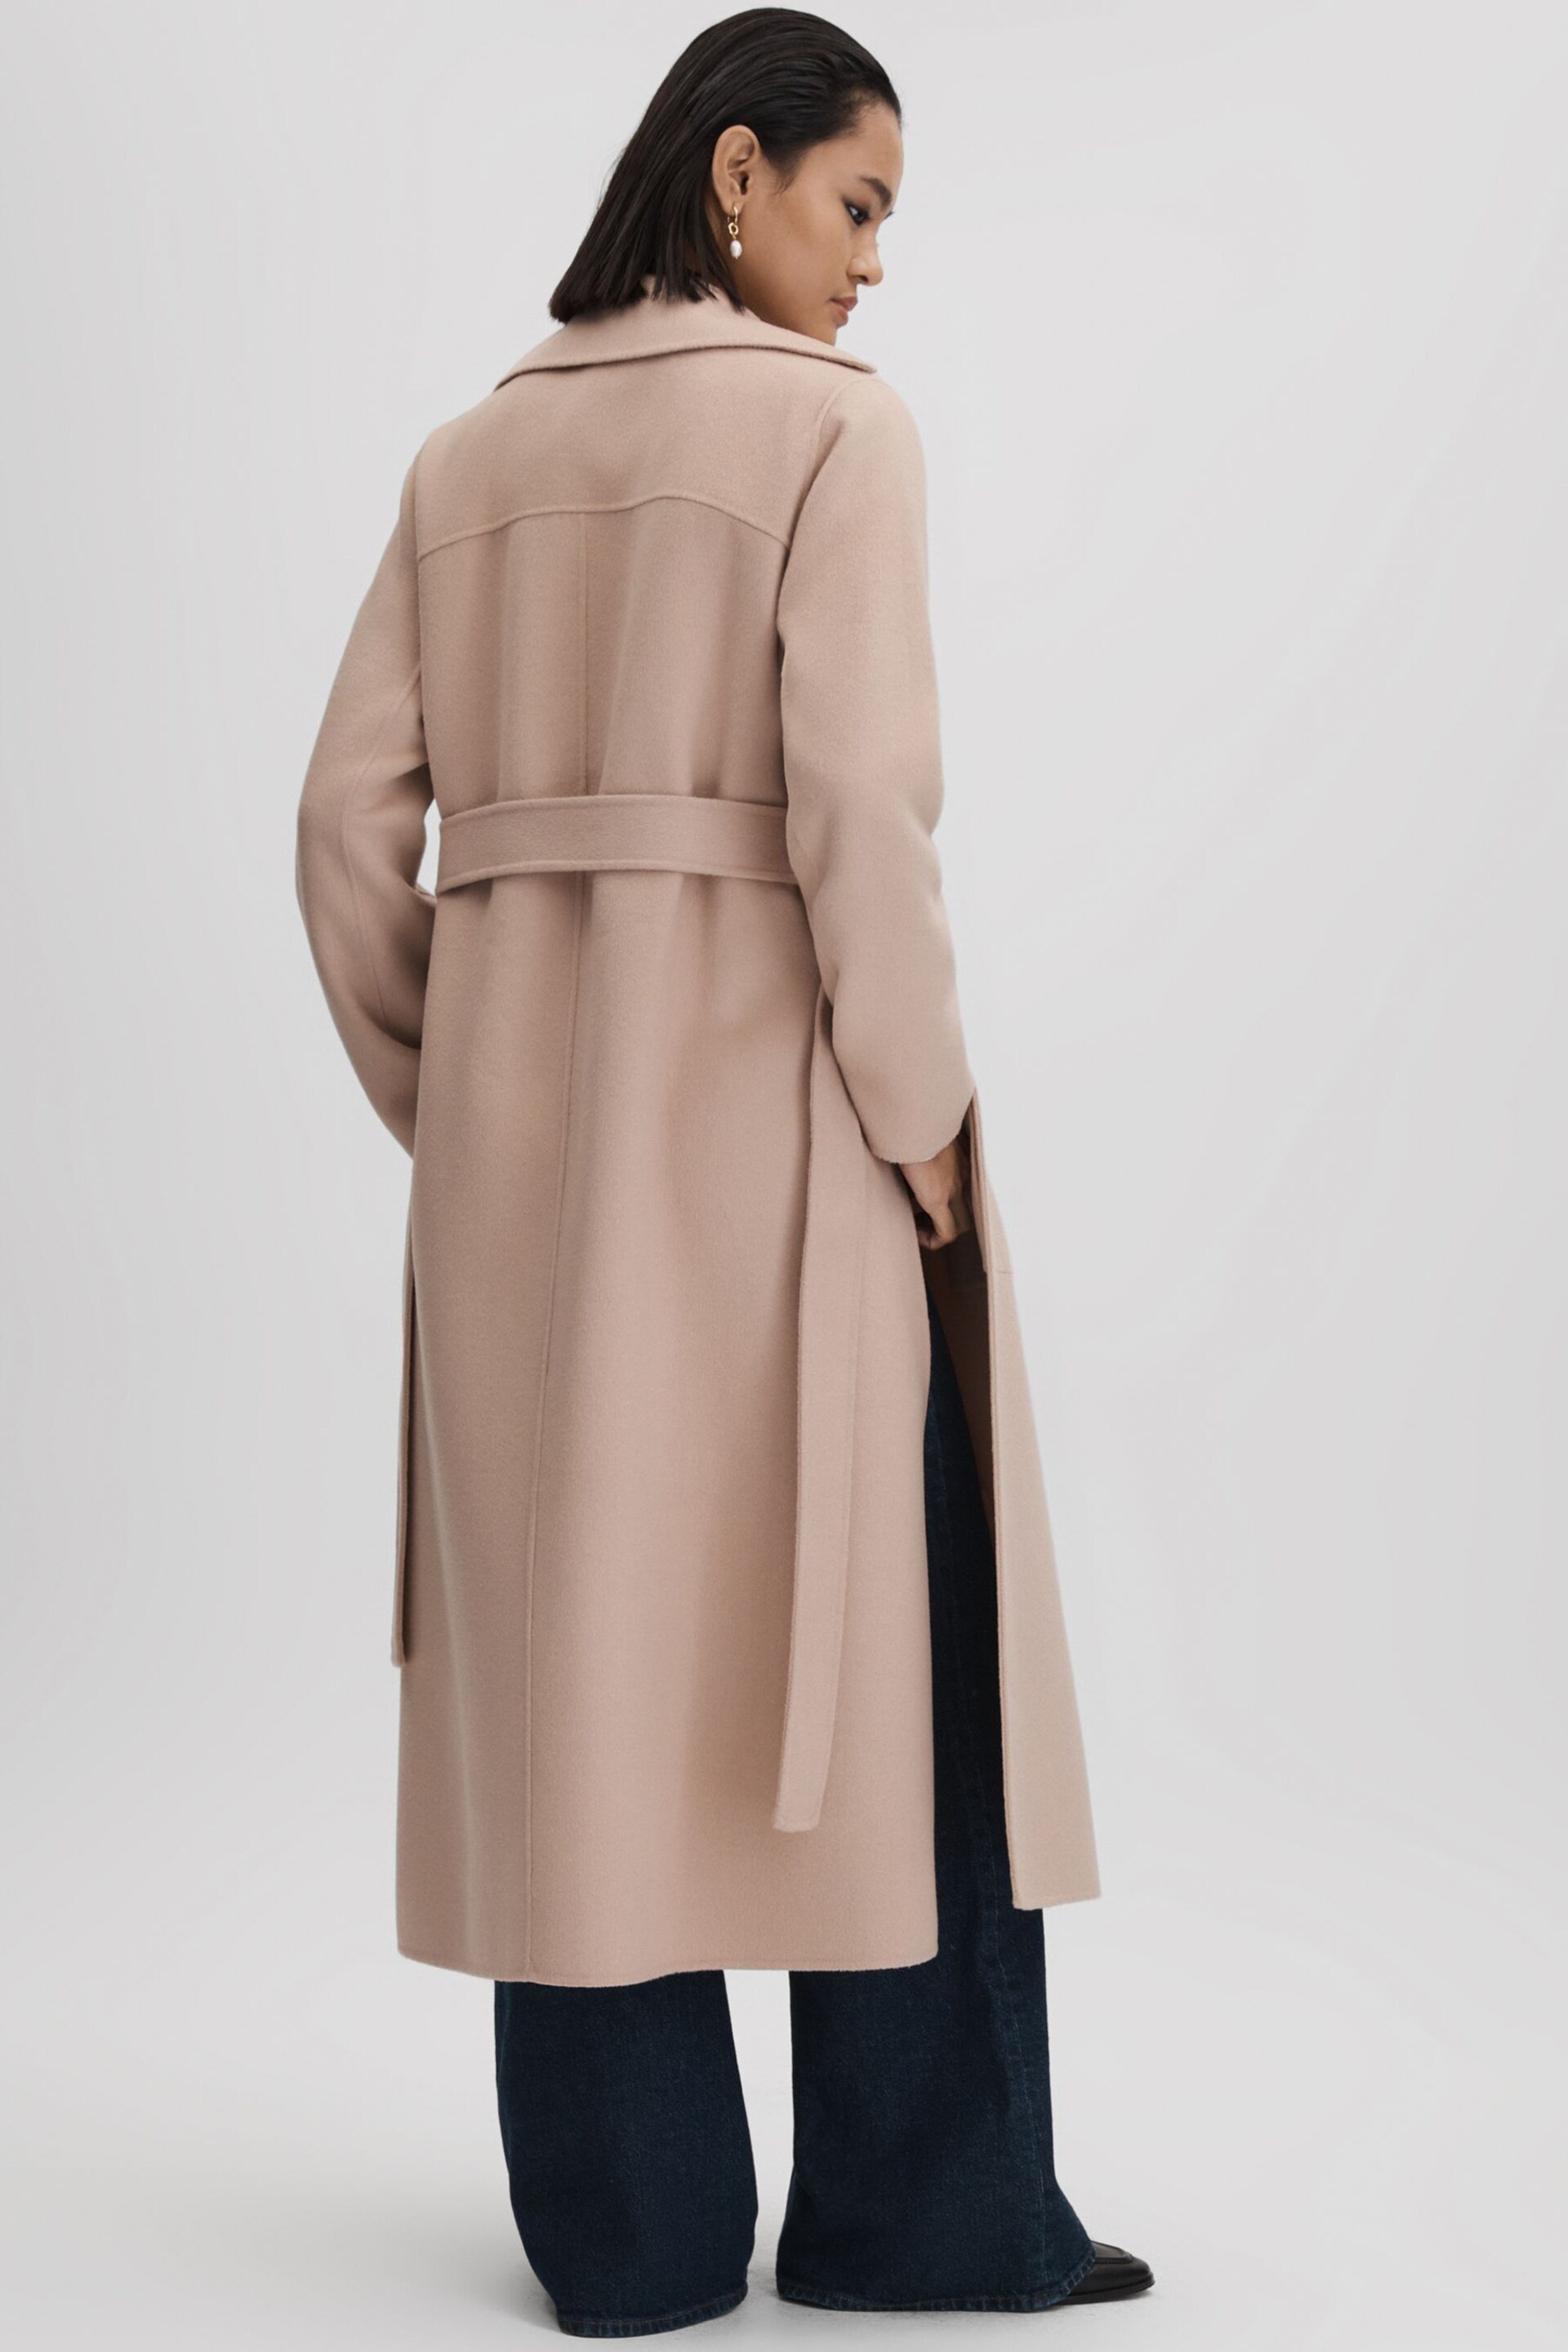 Reiss Neutral Sasha Wool Blend Double Breasted Blindseam Coat - Image 3 of 6